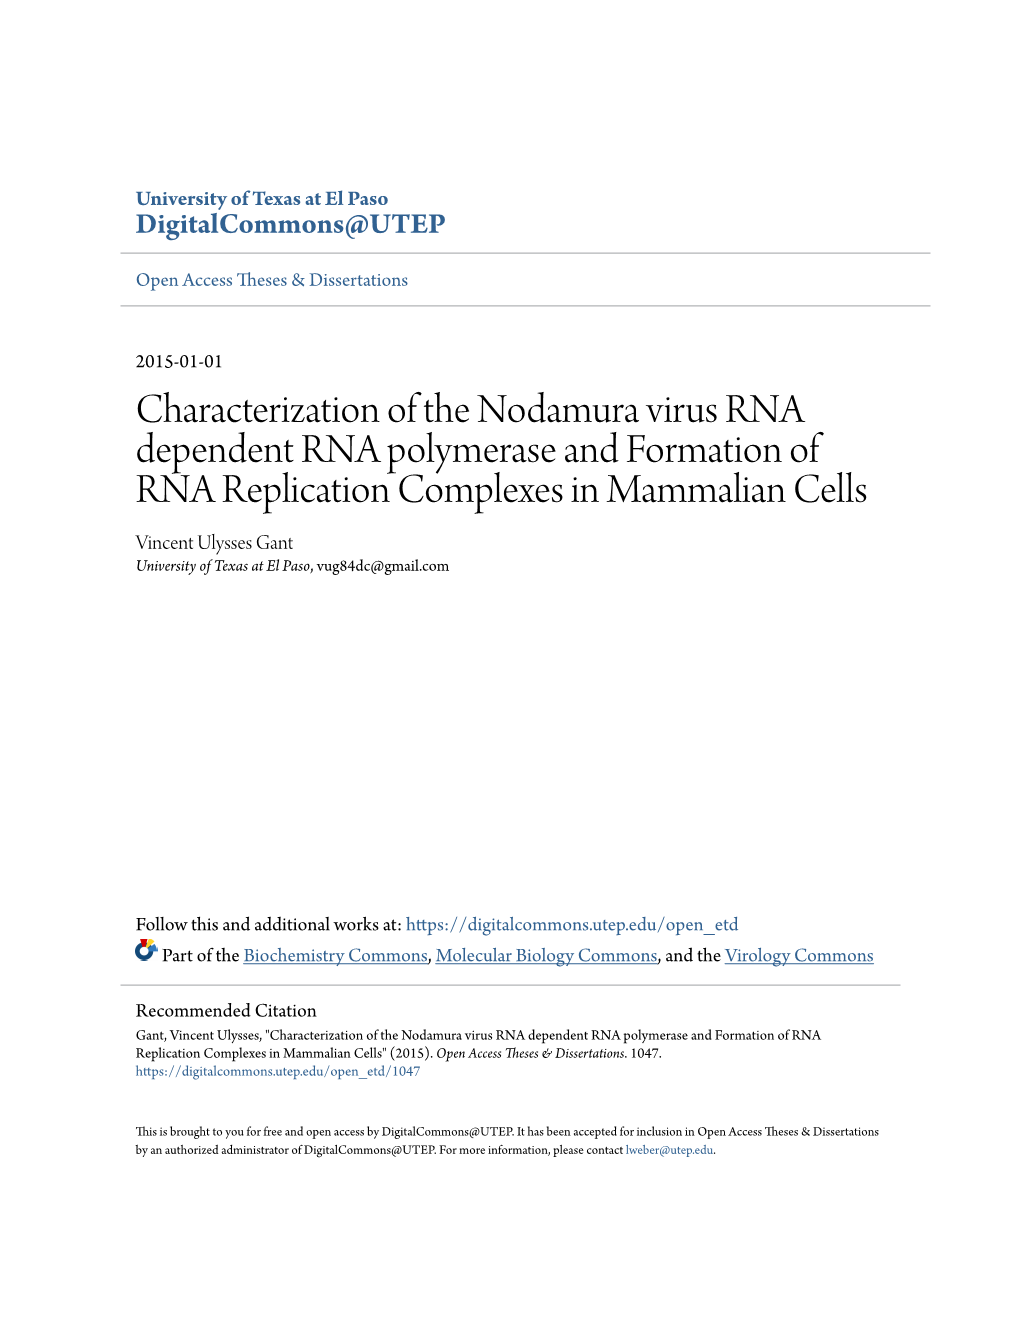 Characterization of the Nodamura Virus RNA Dependent RNA